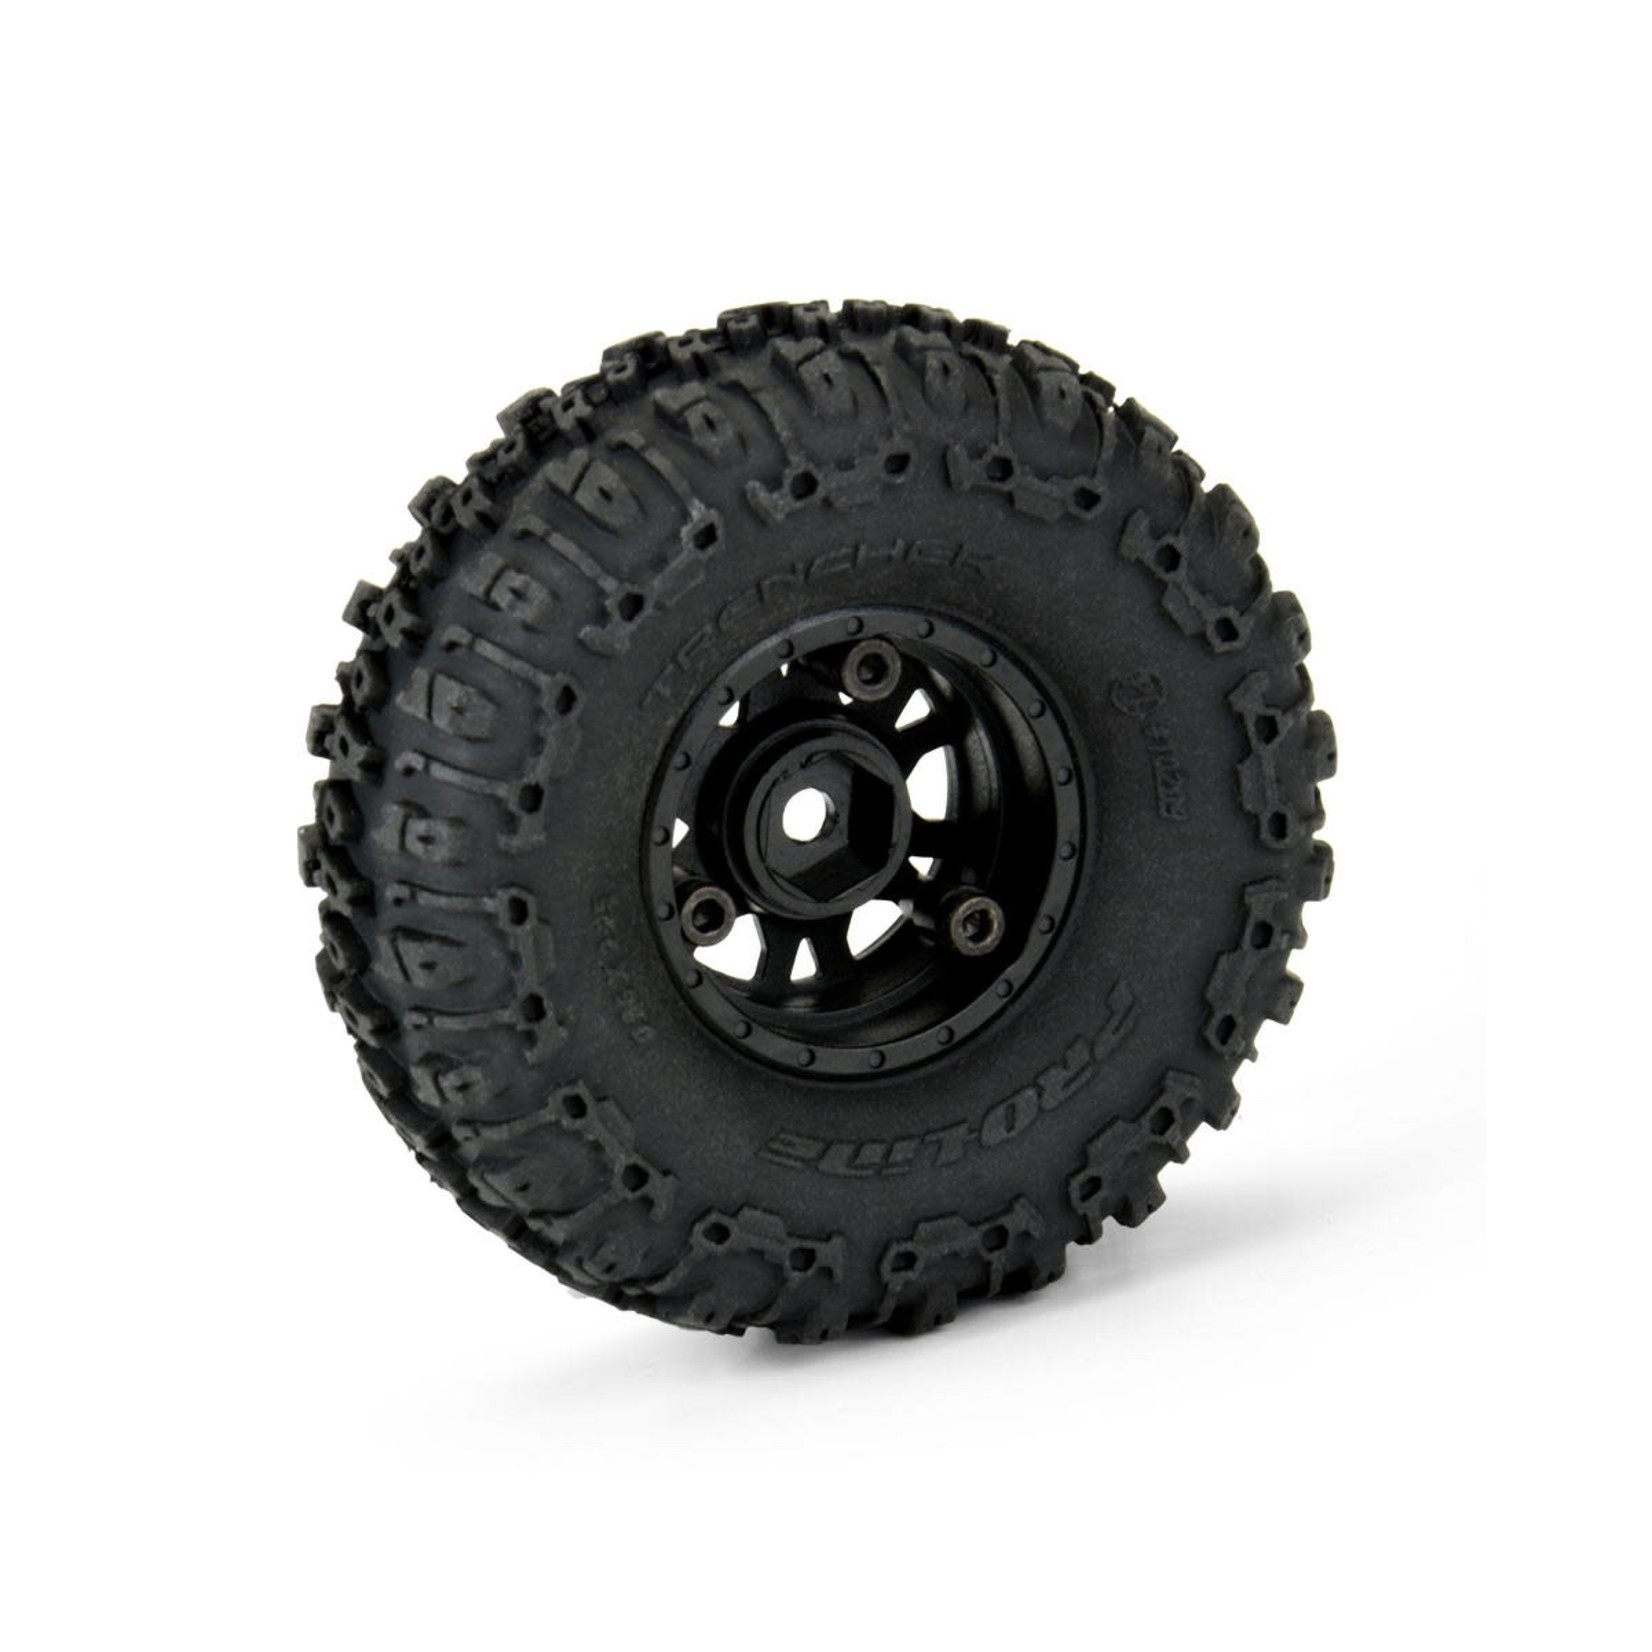 Pro-Line Pro-Line SCX24 1.0" Trencher Pre-Mounted Tires w/Impulse Wheels (Black) (4) (Medium) #10209-10